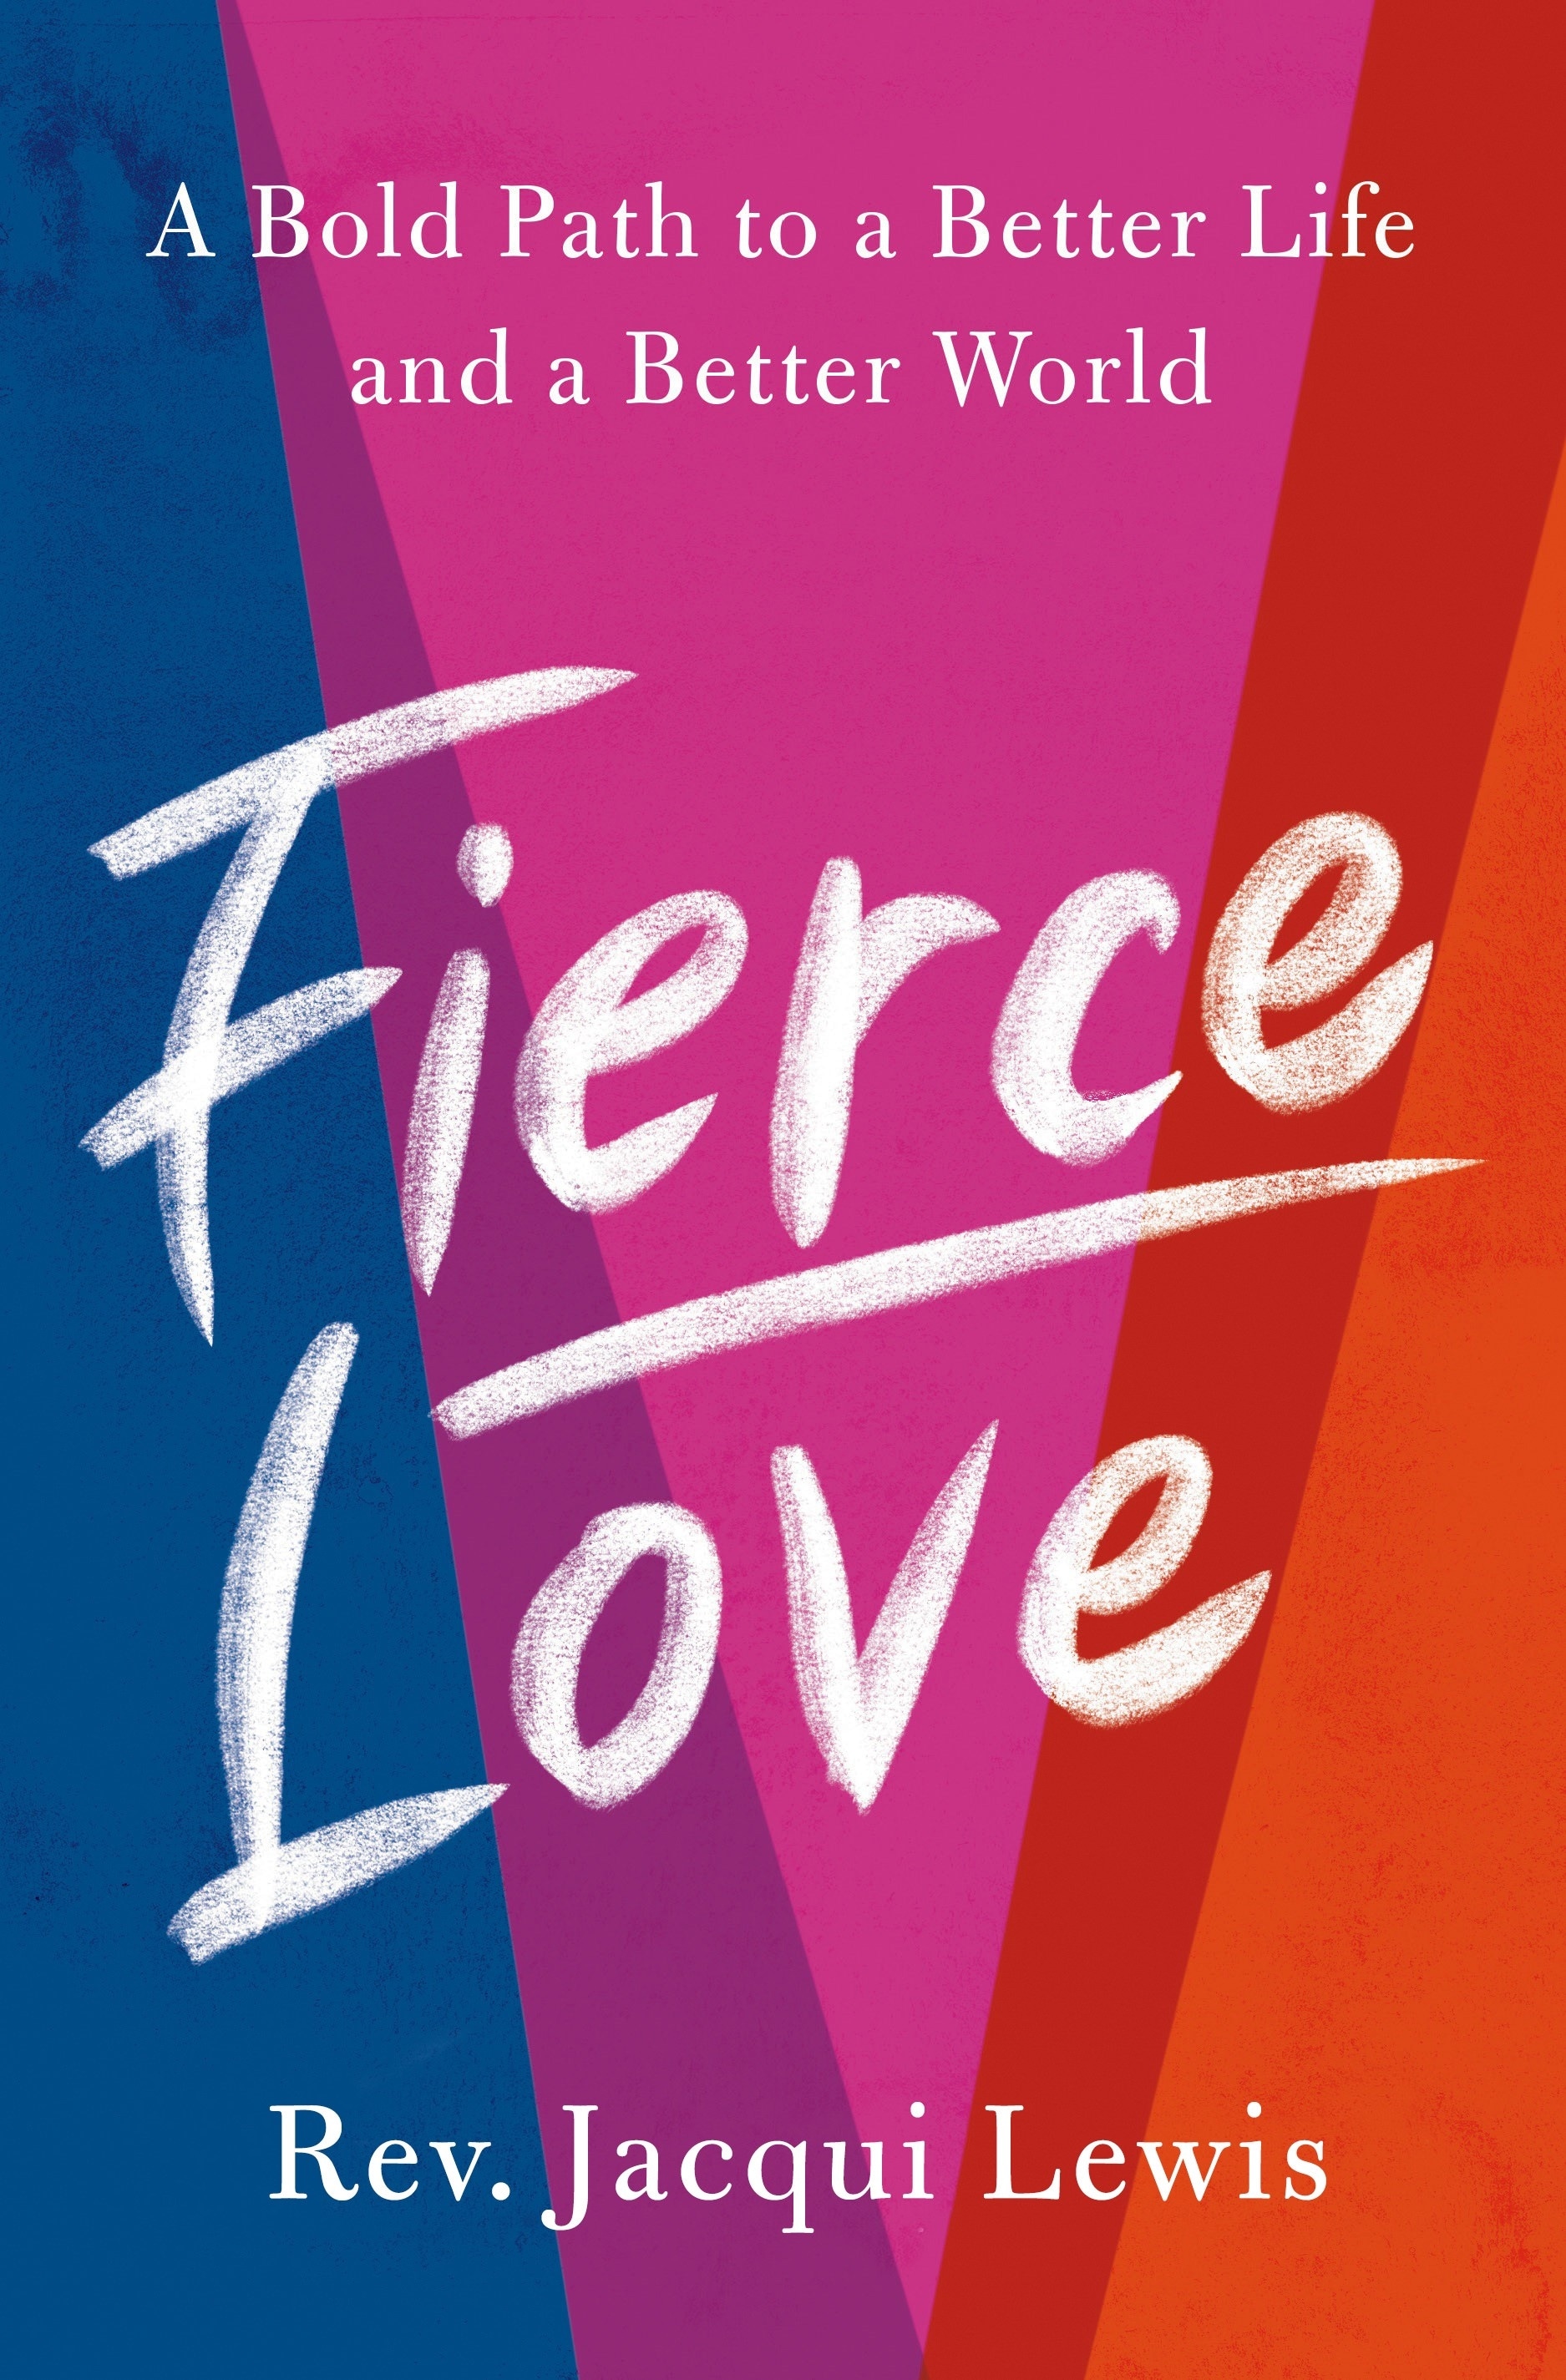 Book “Fierce Love” by Jacqui Lewis — November 11, 2021